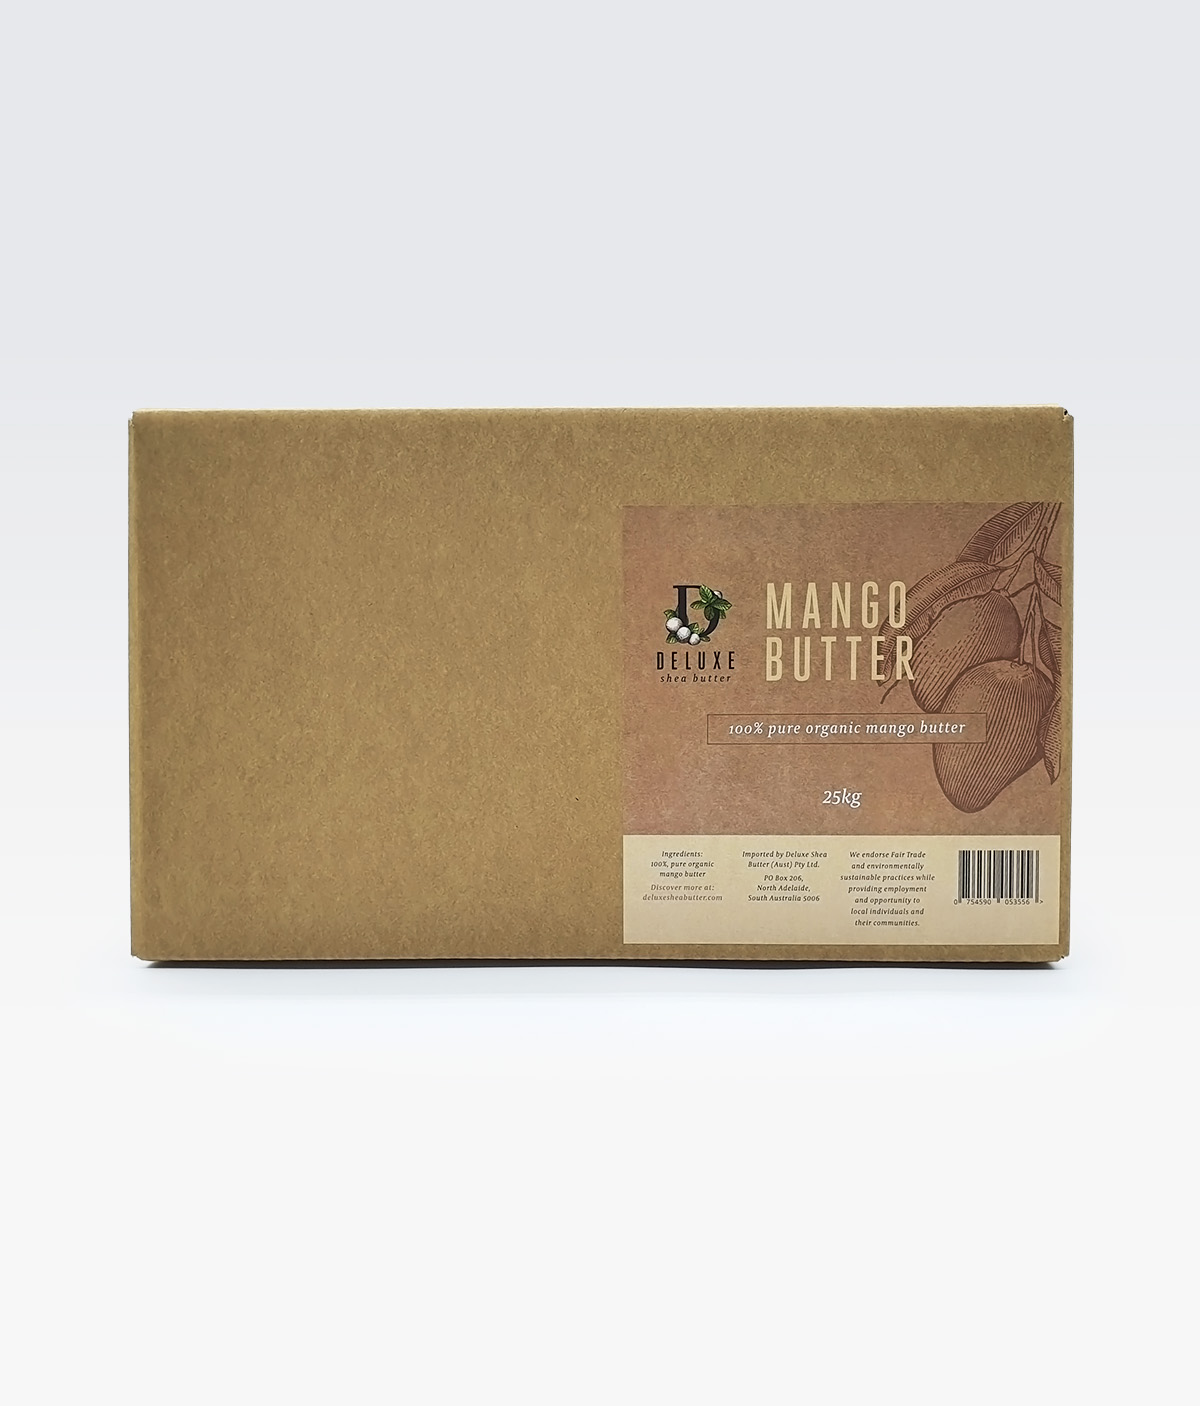 Deluxe Shea Butter® Organic Mango Butter 25kg Box